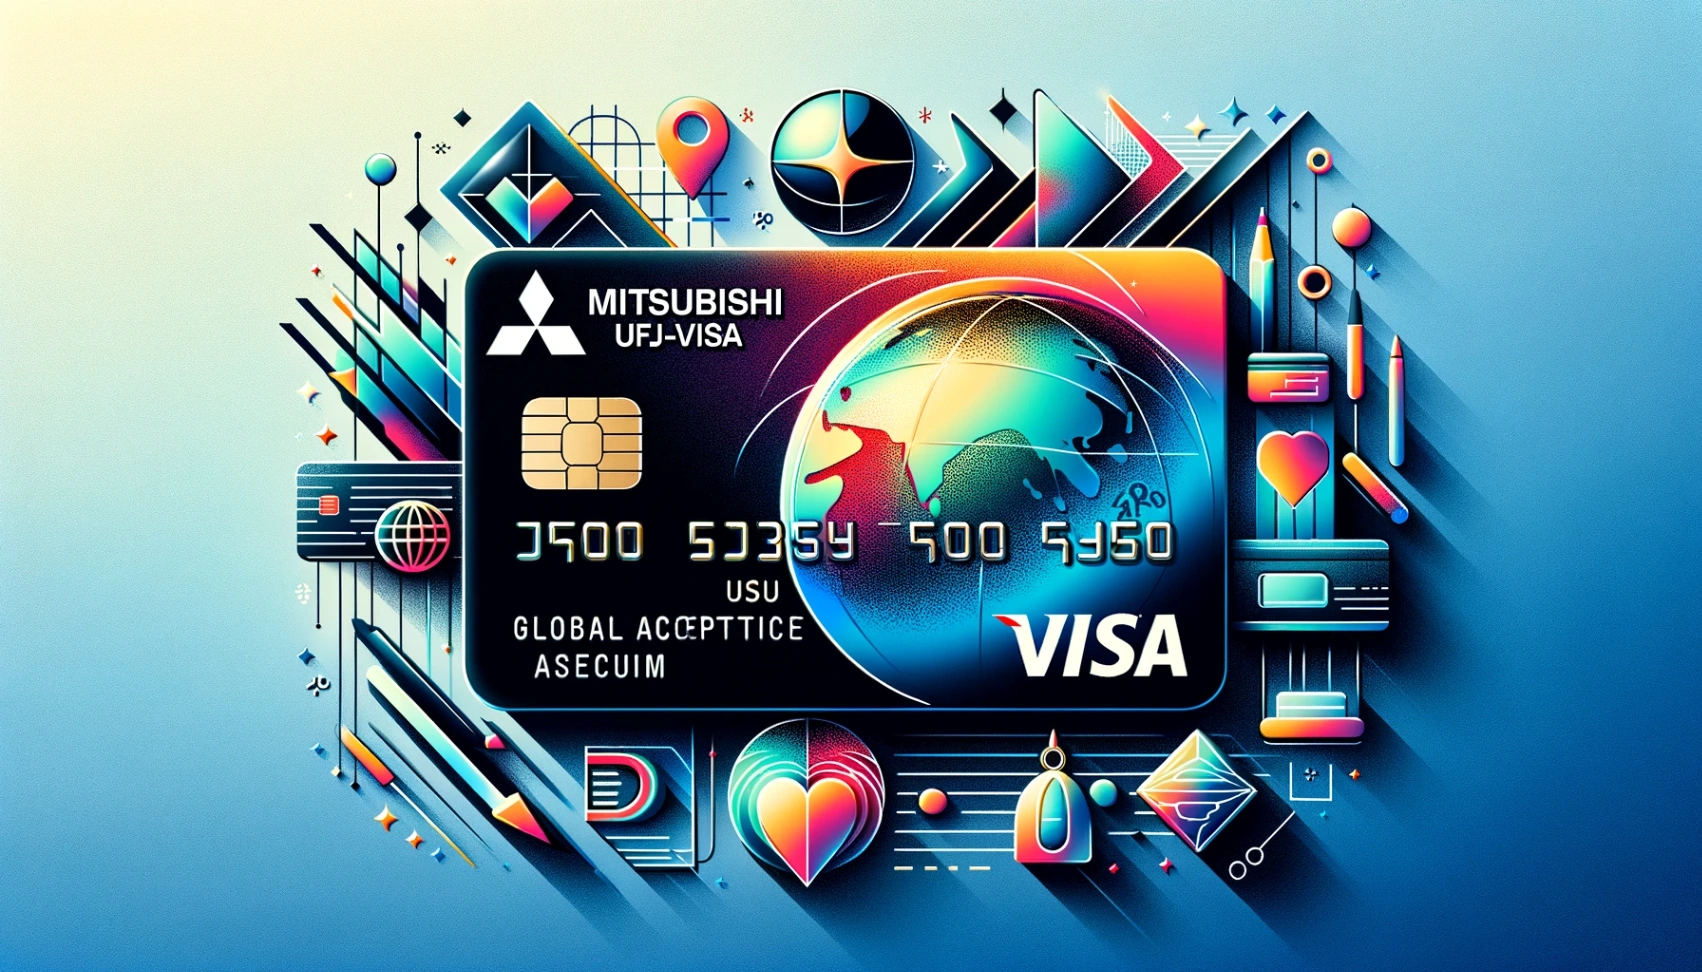 Mitsubishi UFJ-VISA Card – Learn the Benefits and How to Apply